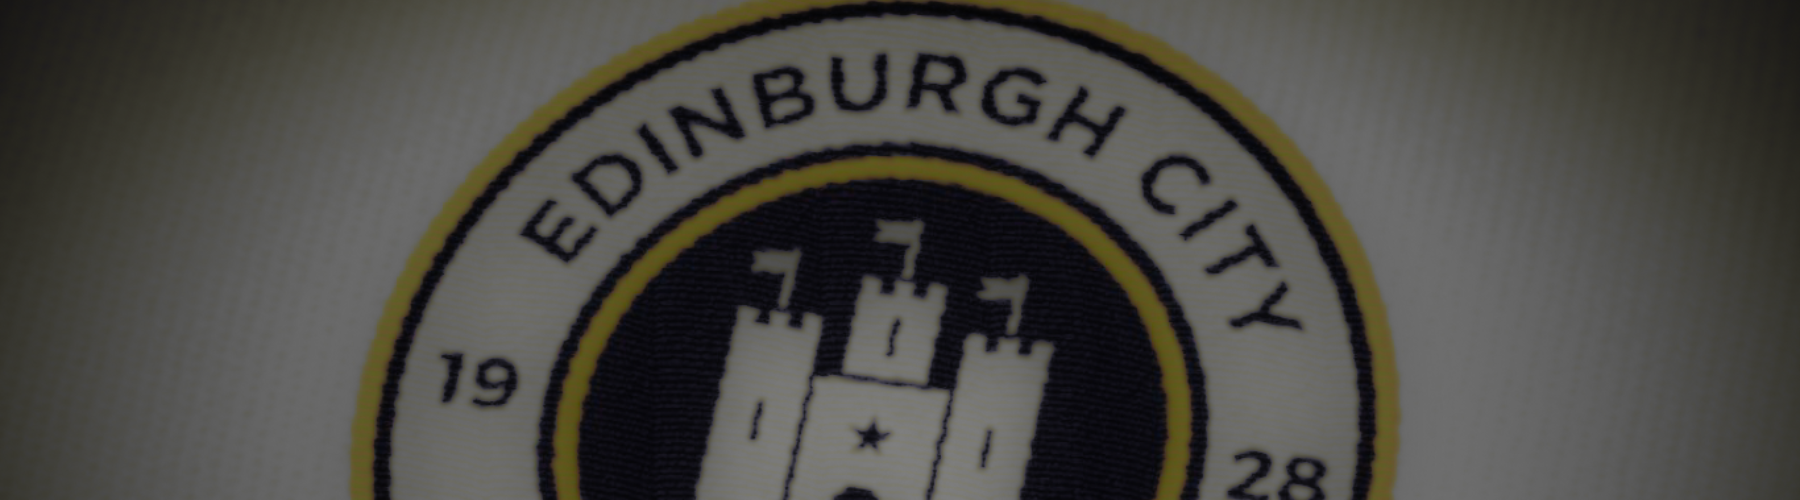 Edinburgh City FC Merchandise